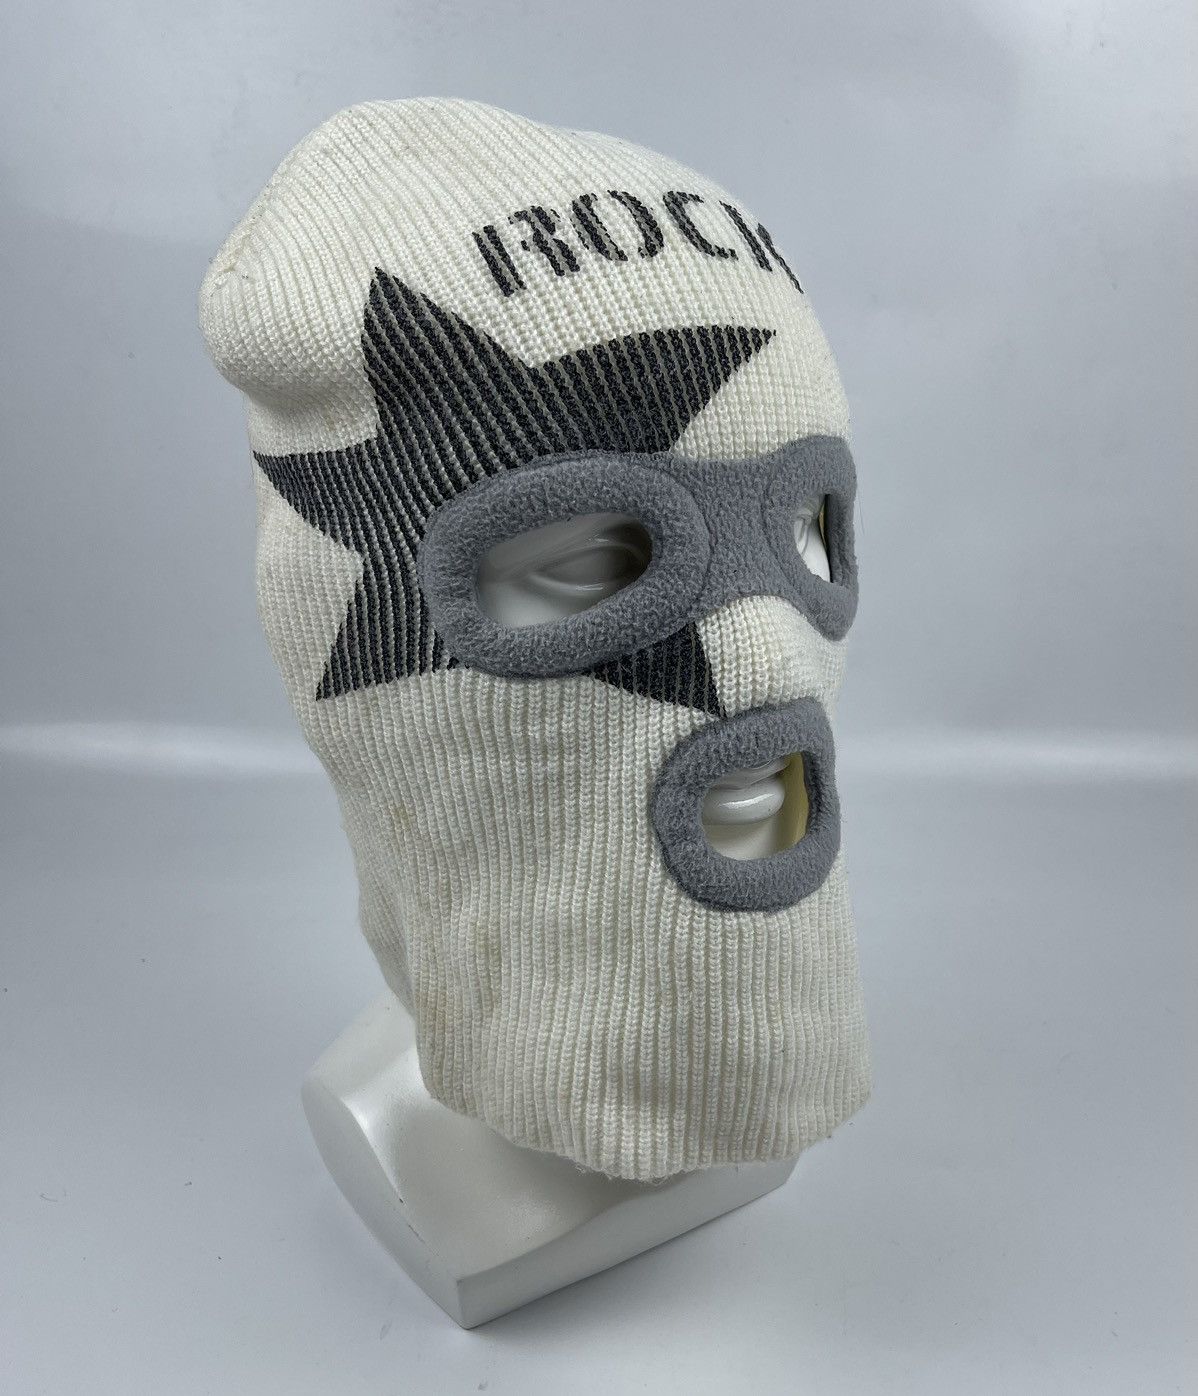 Japanese Brand - rock balaclava ski mask tc14 - 2